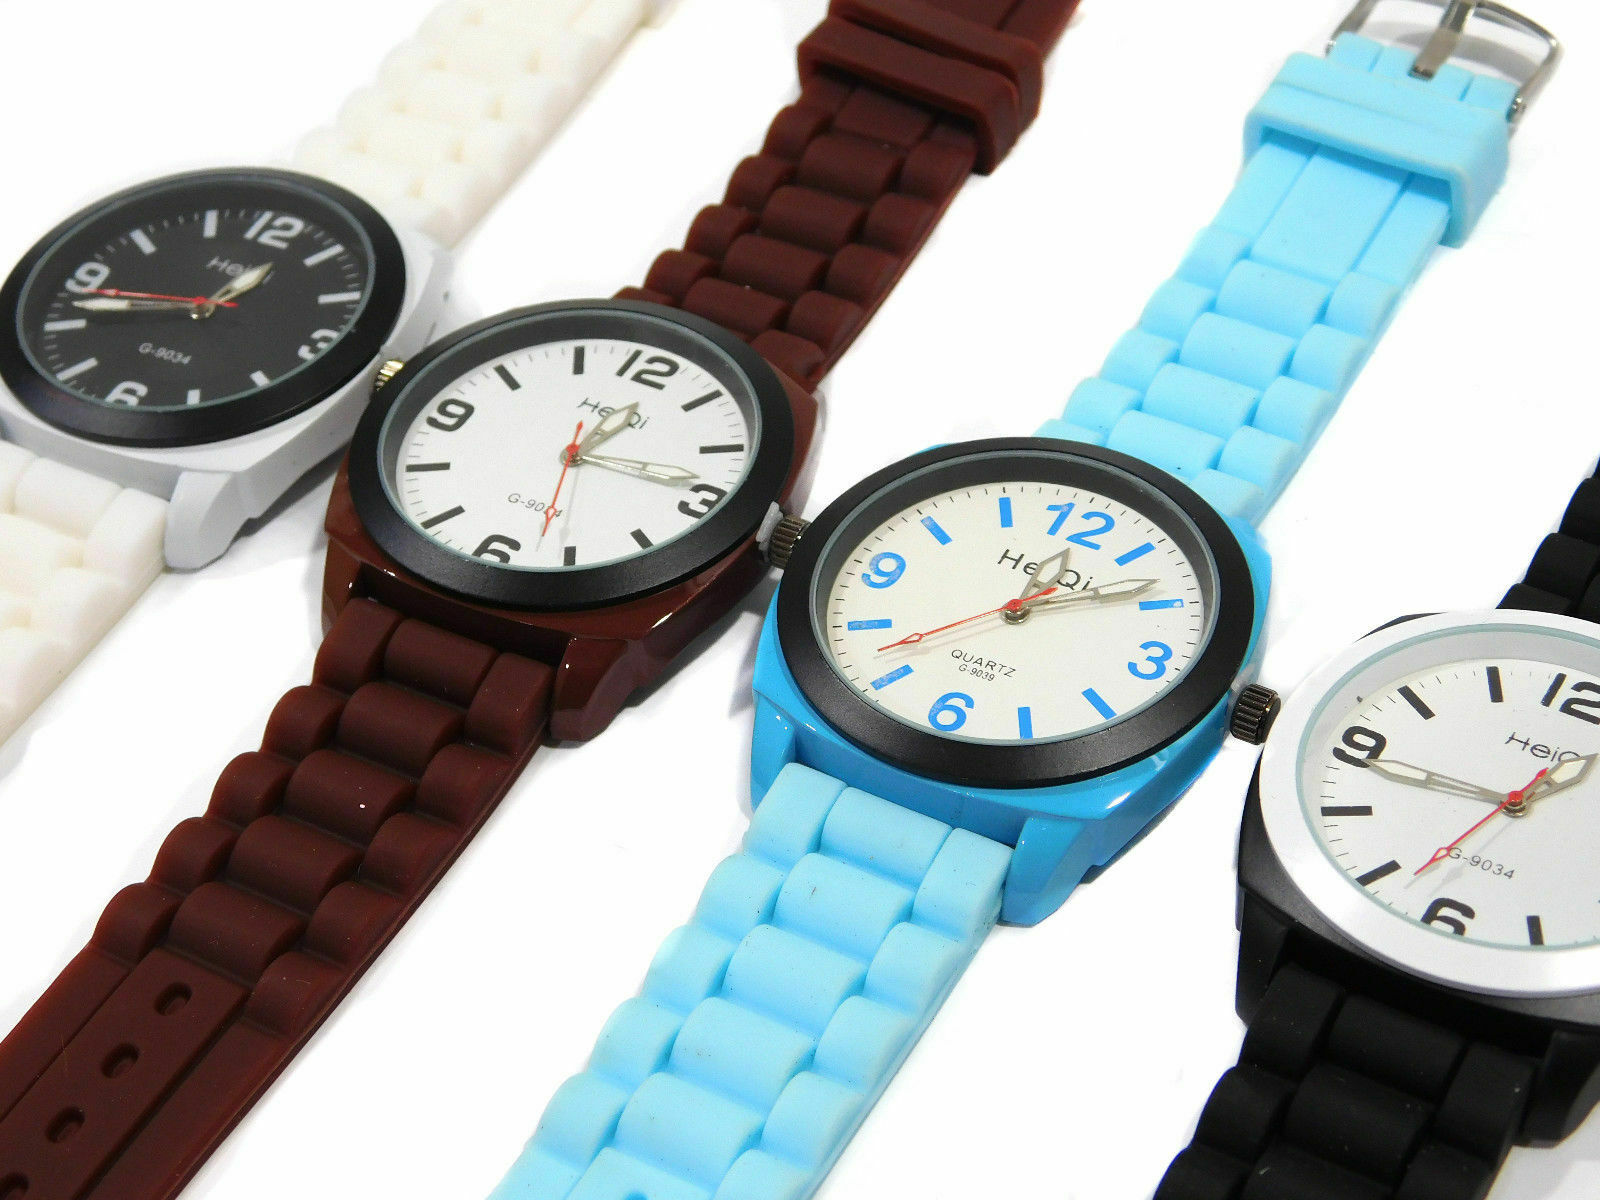 GIMTO Men Digital Quartz Wristwatch Review (Model: GM0201) ⌚ - YouTube